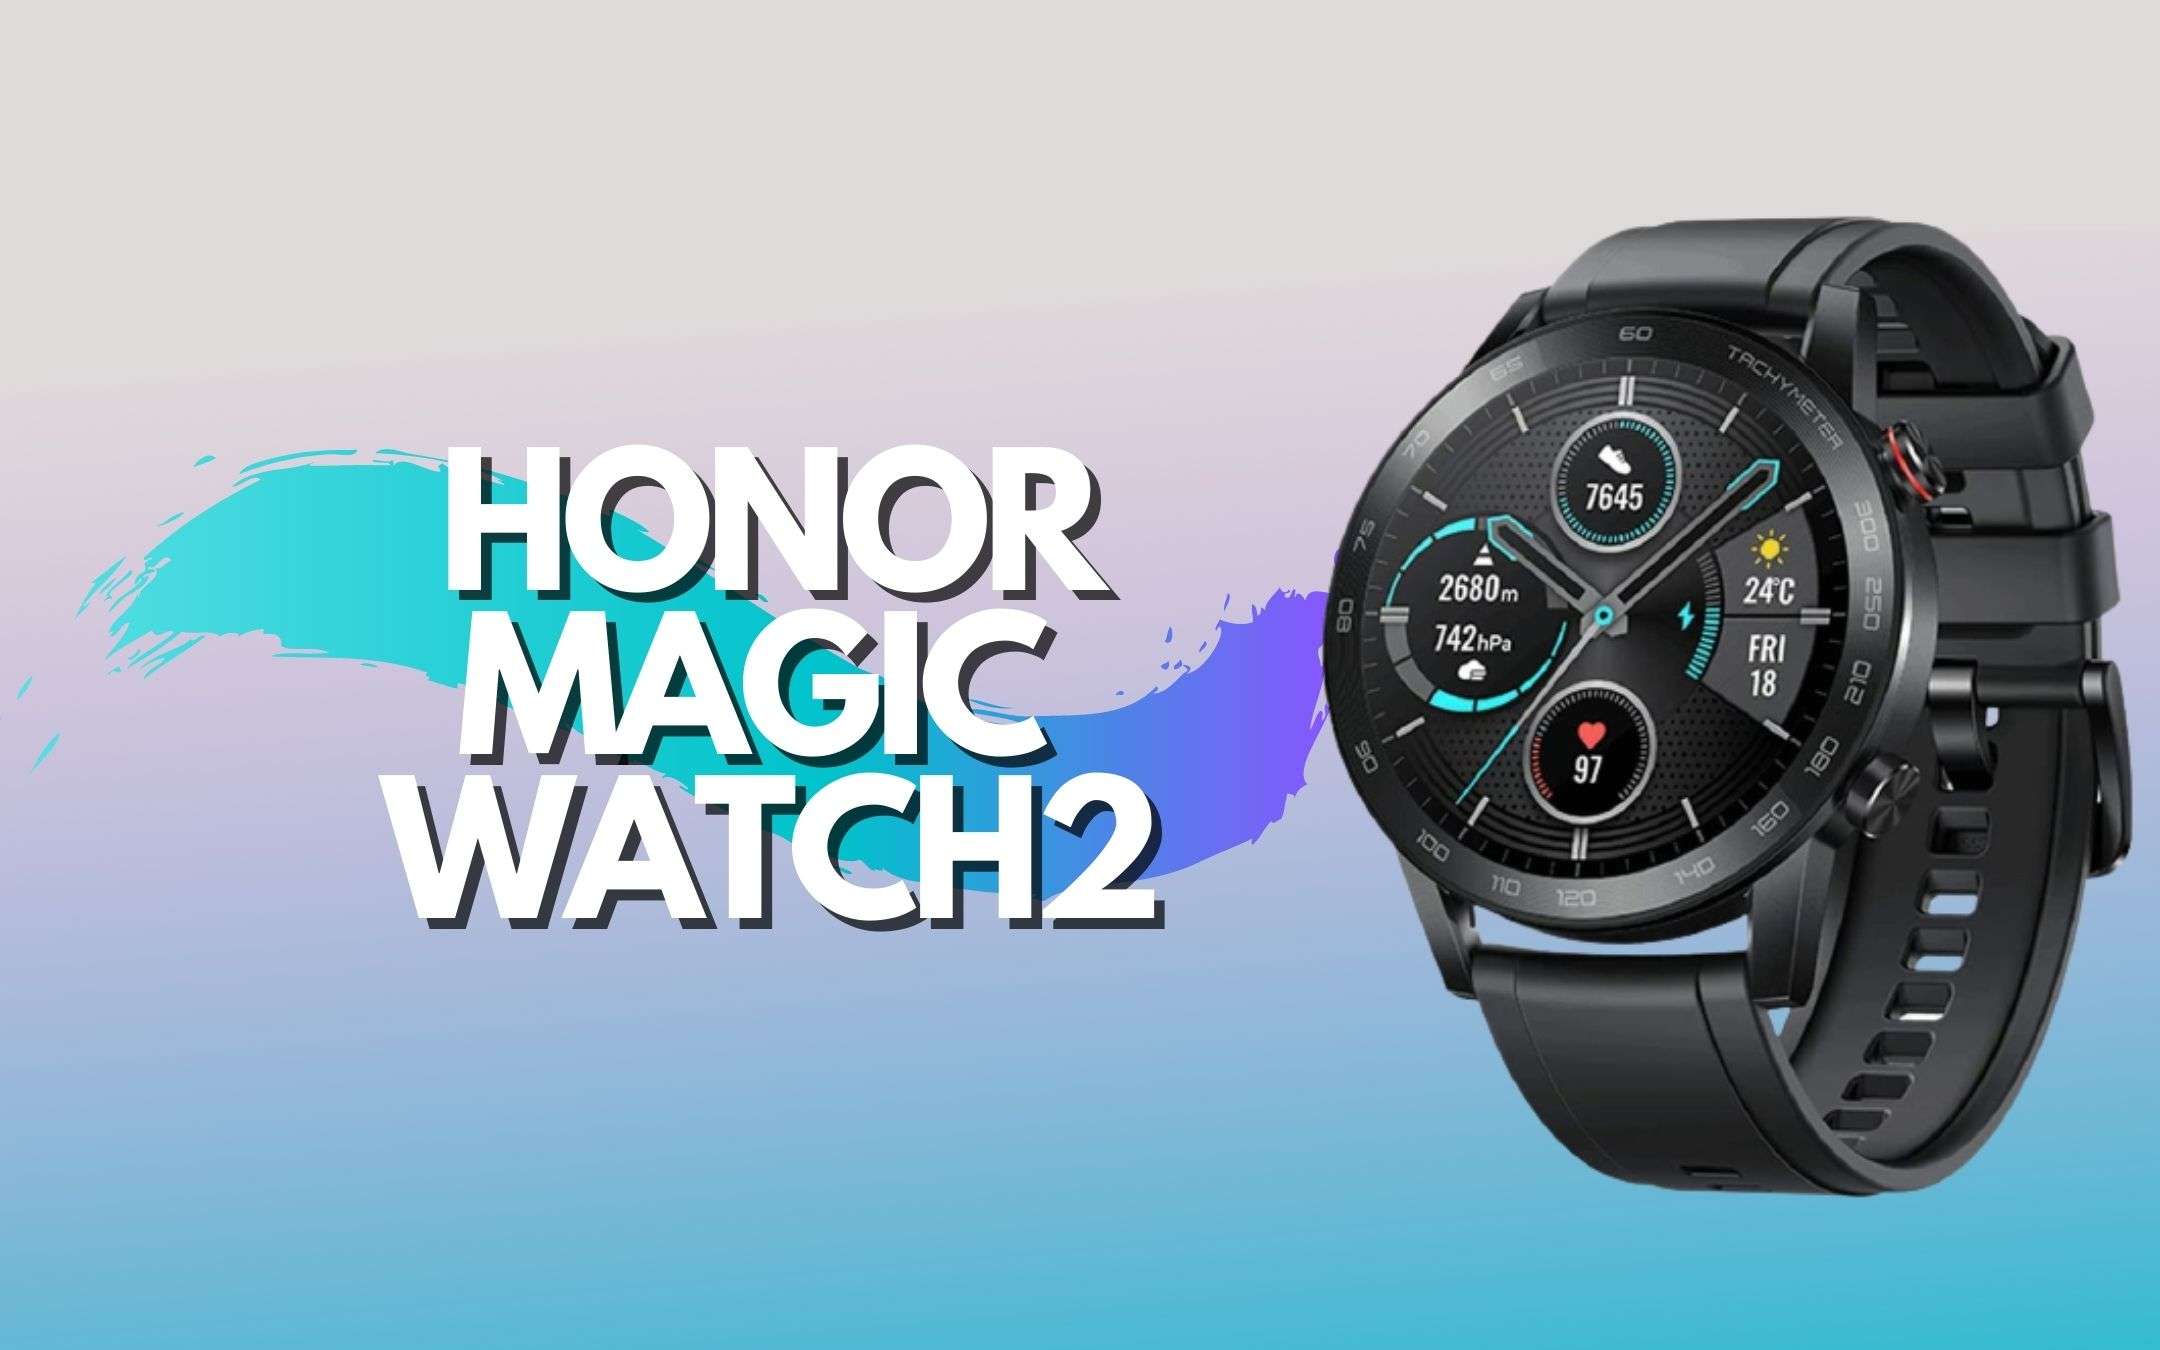 Honor Magic Watch 2 BOMBA Amazon: doppio sconto